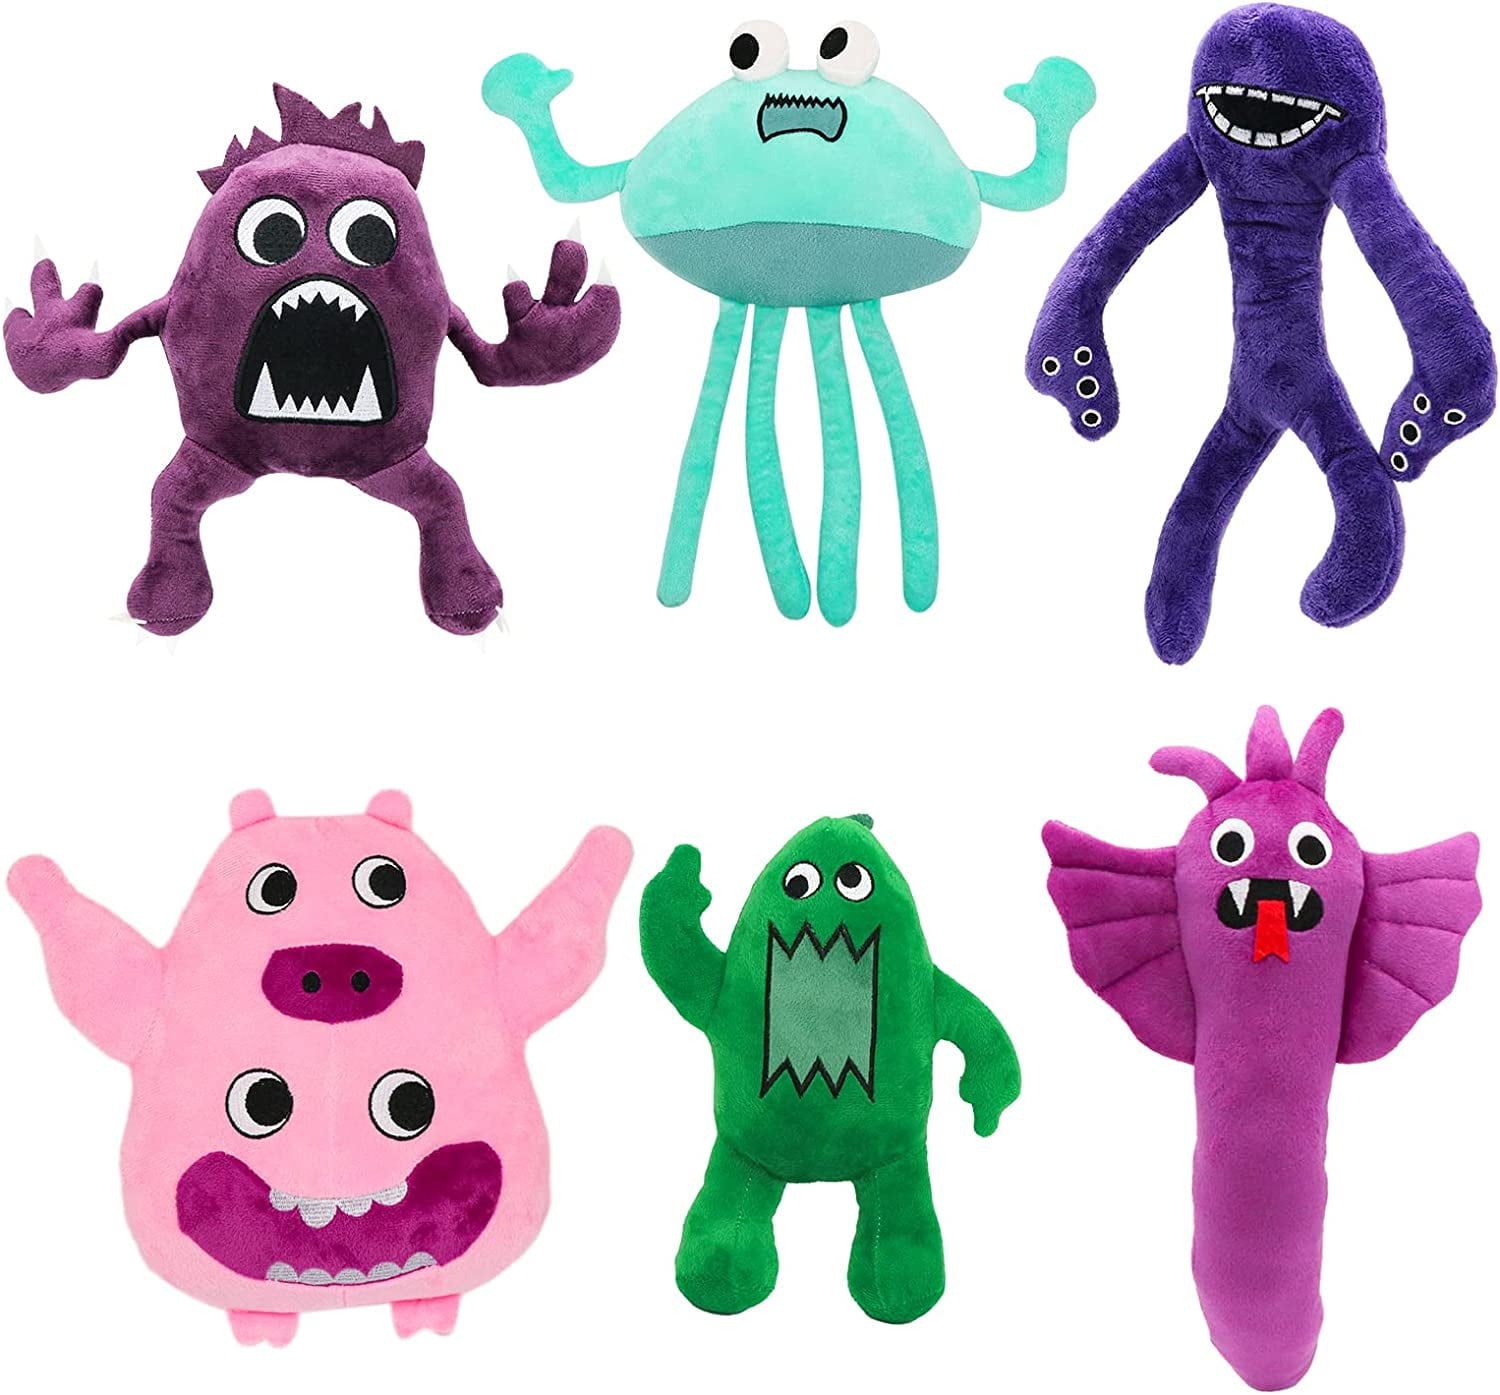 Garten of Banban Plush Toy Games Action Figure Monster Doll Soft Gift Nab  na b